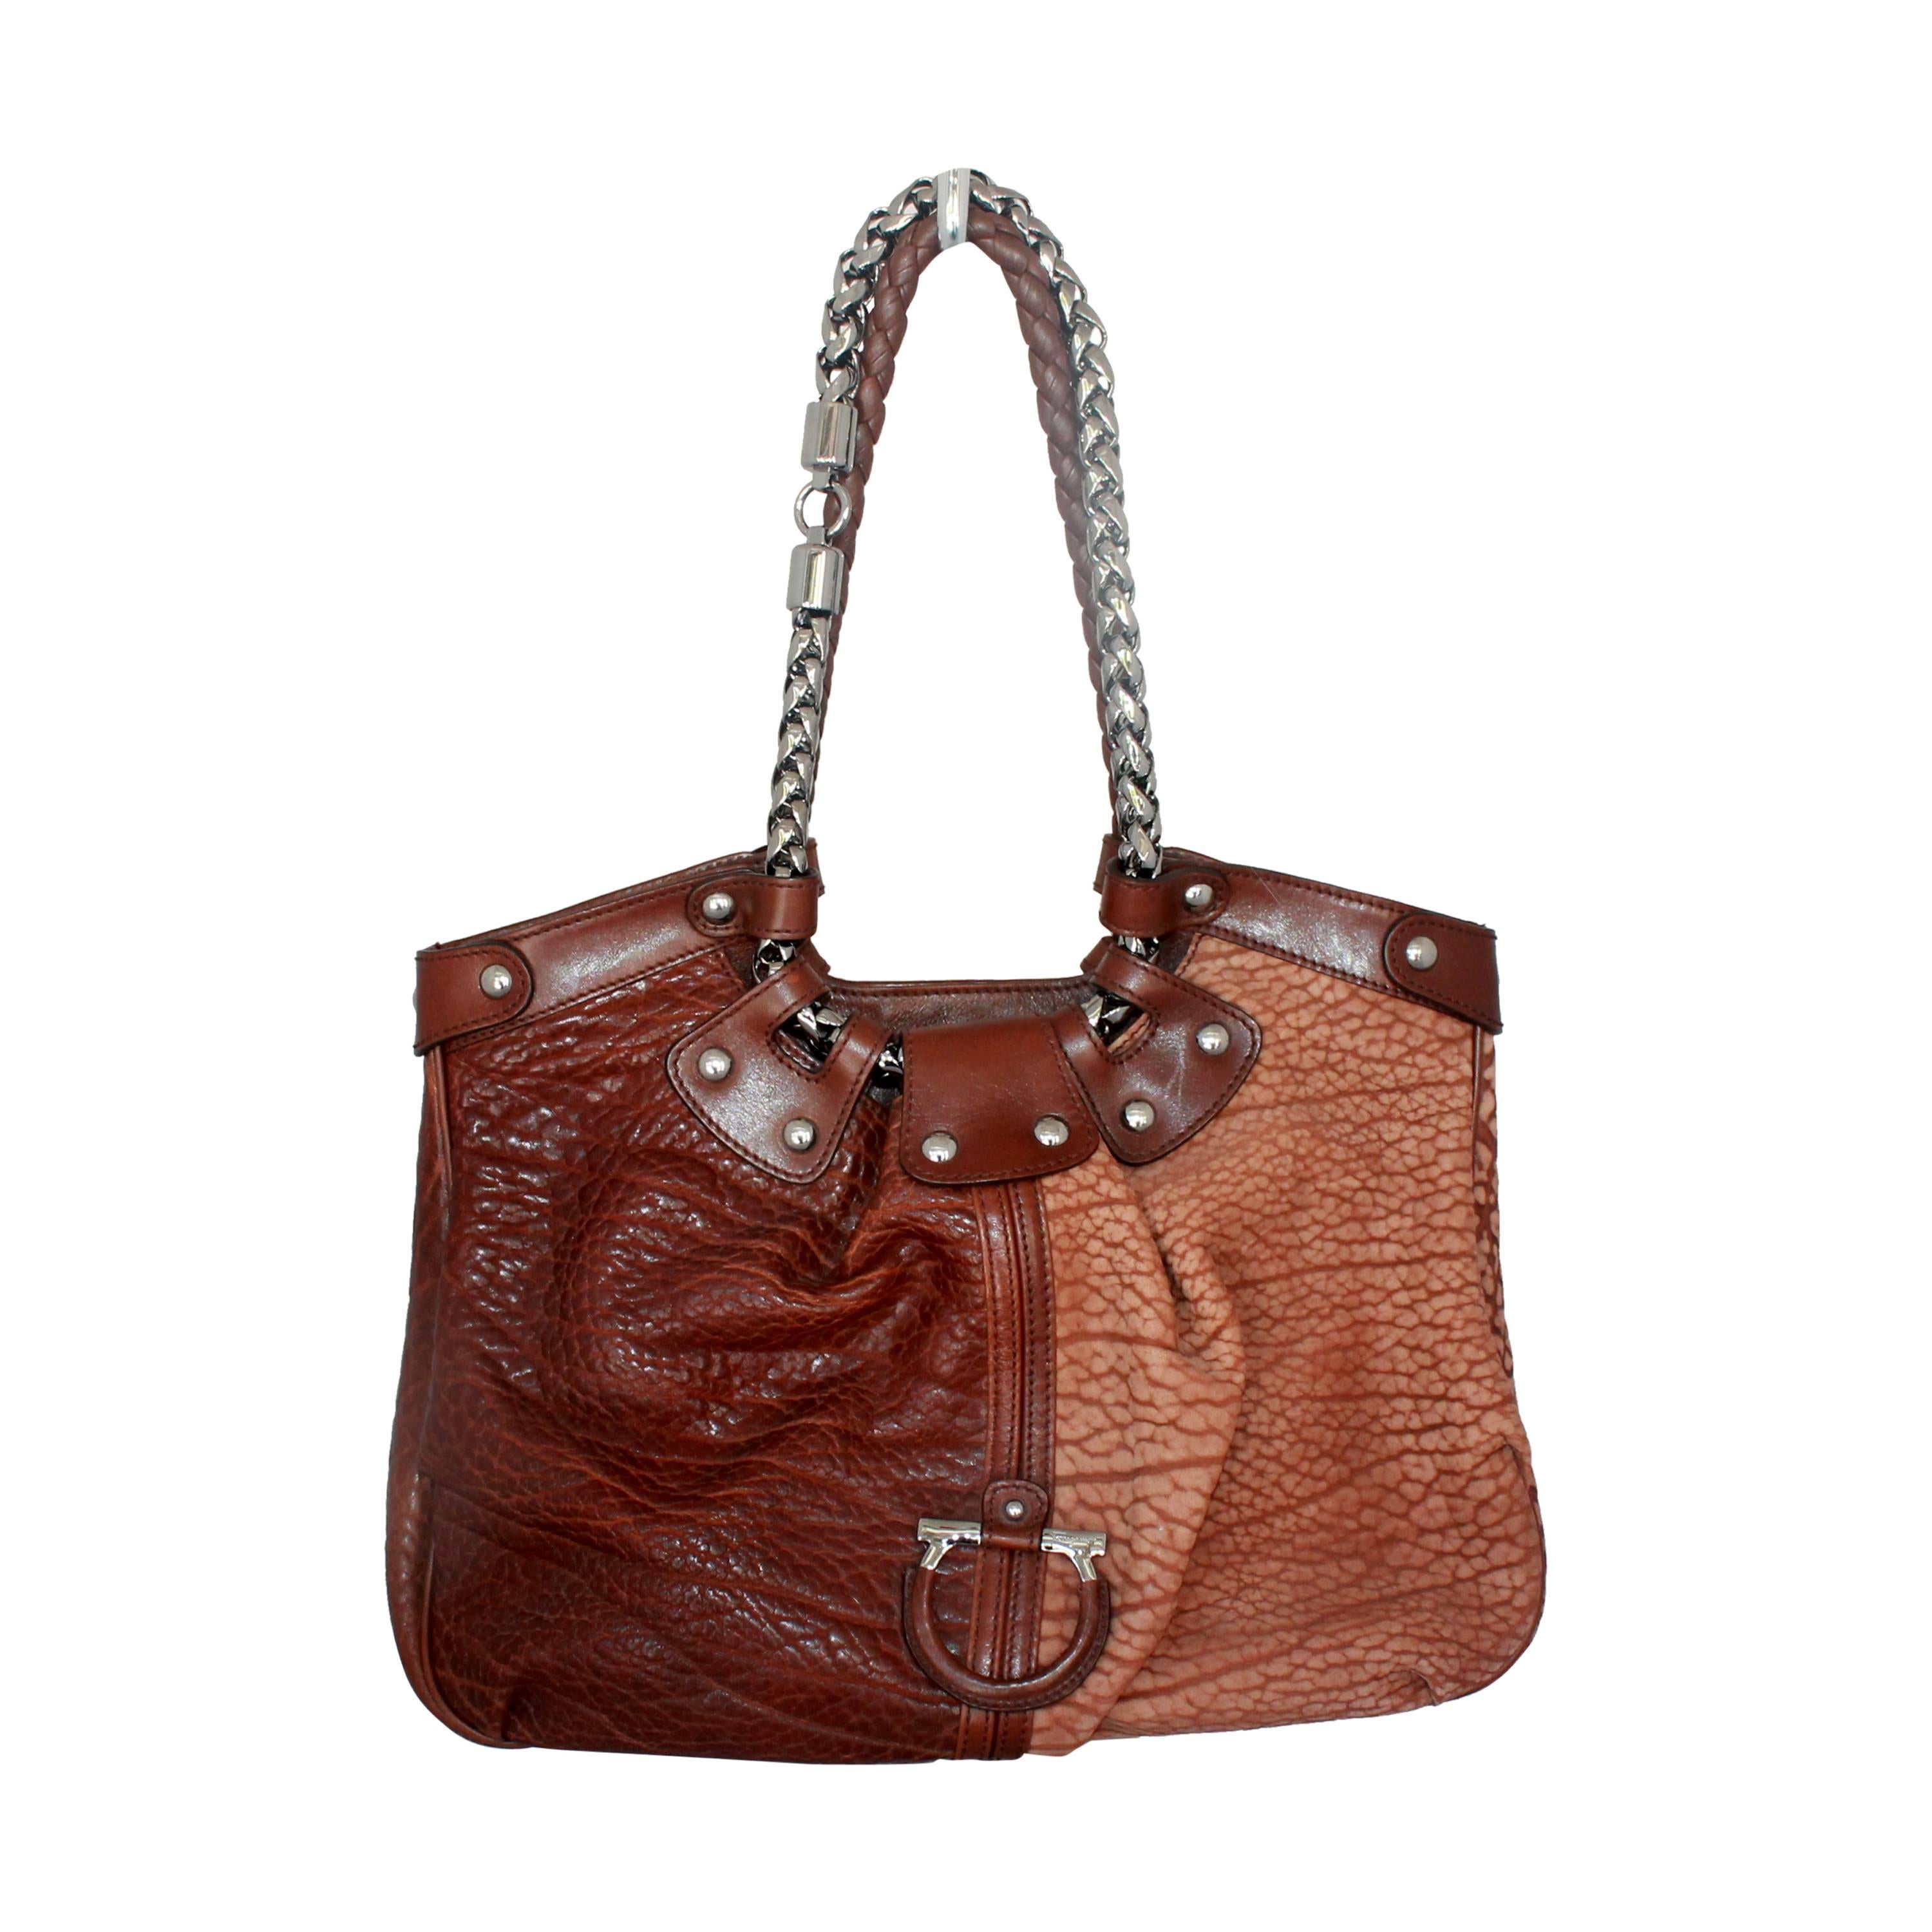 Salvatore Ferragamo Two-Toned Brown Leather Should Bag - SHW